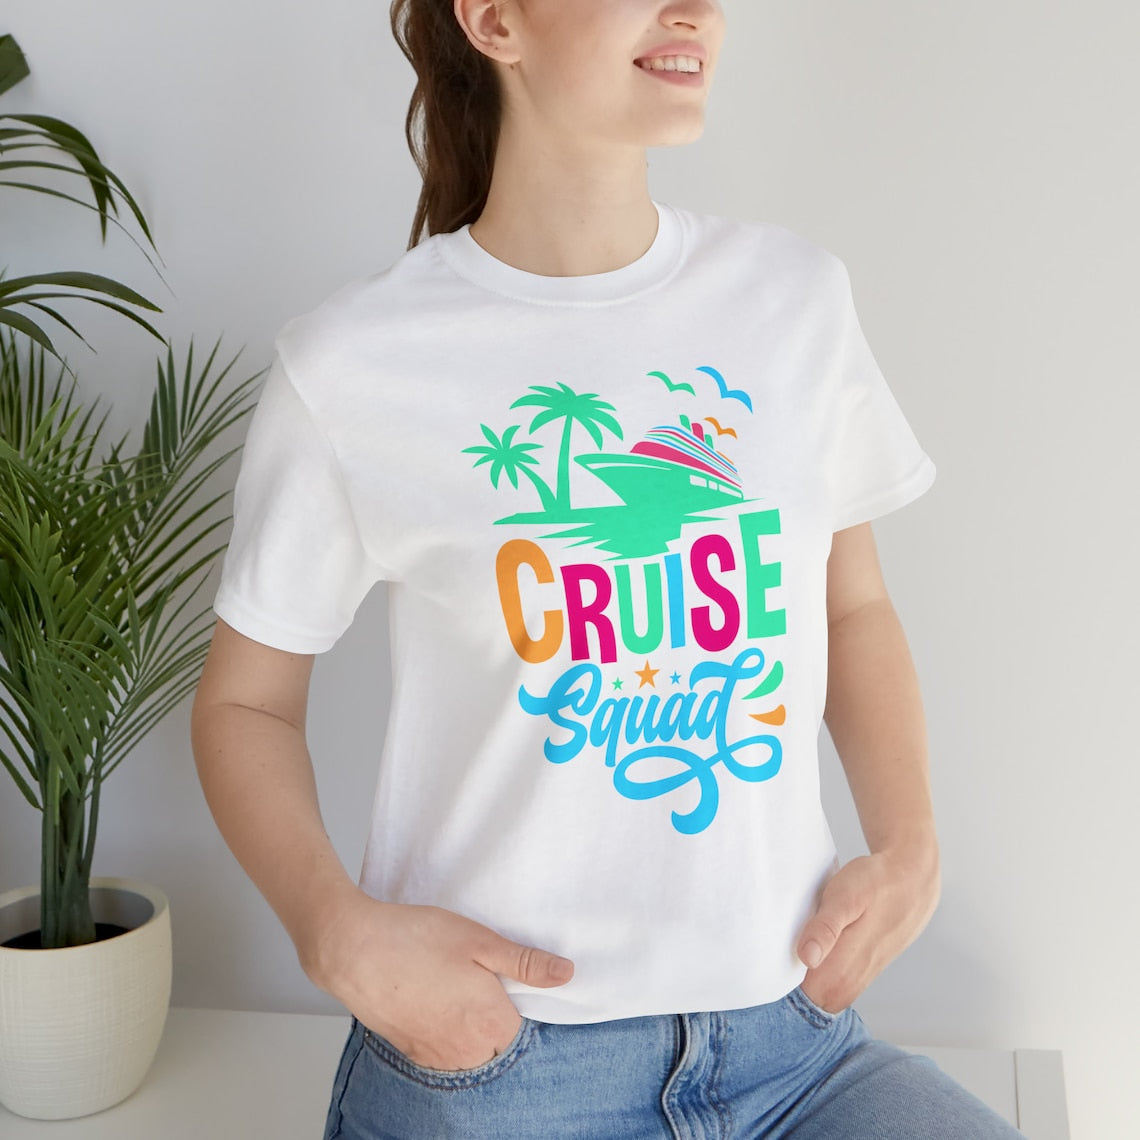 Cruise Squad T-shirt - PeppaTree Design Store